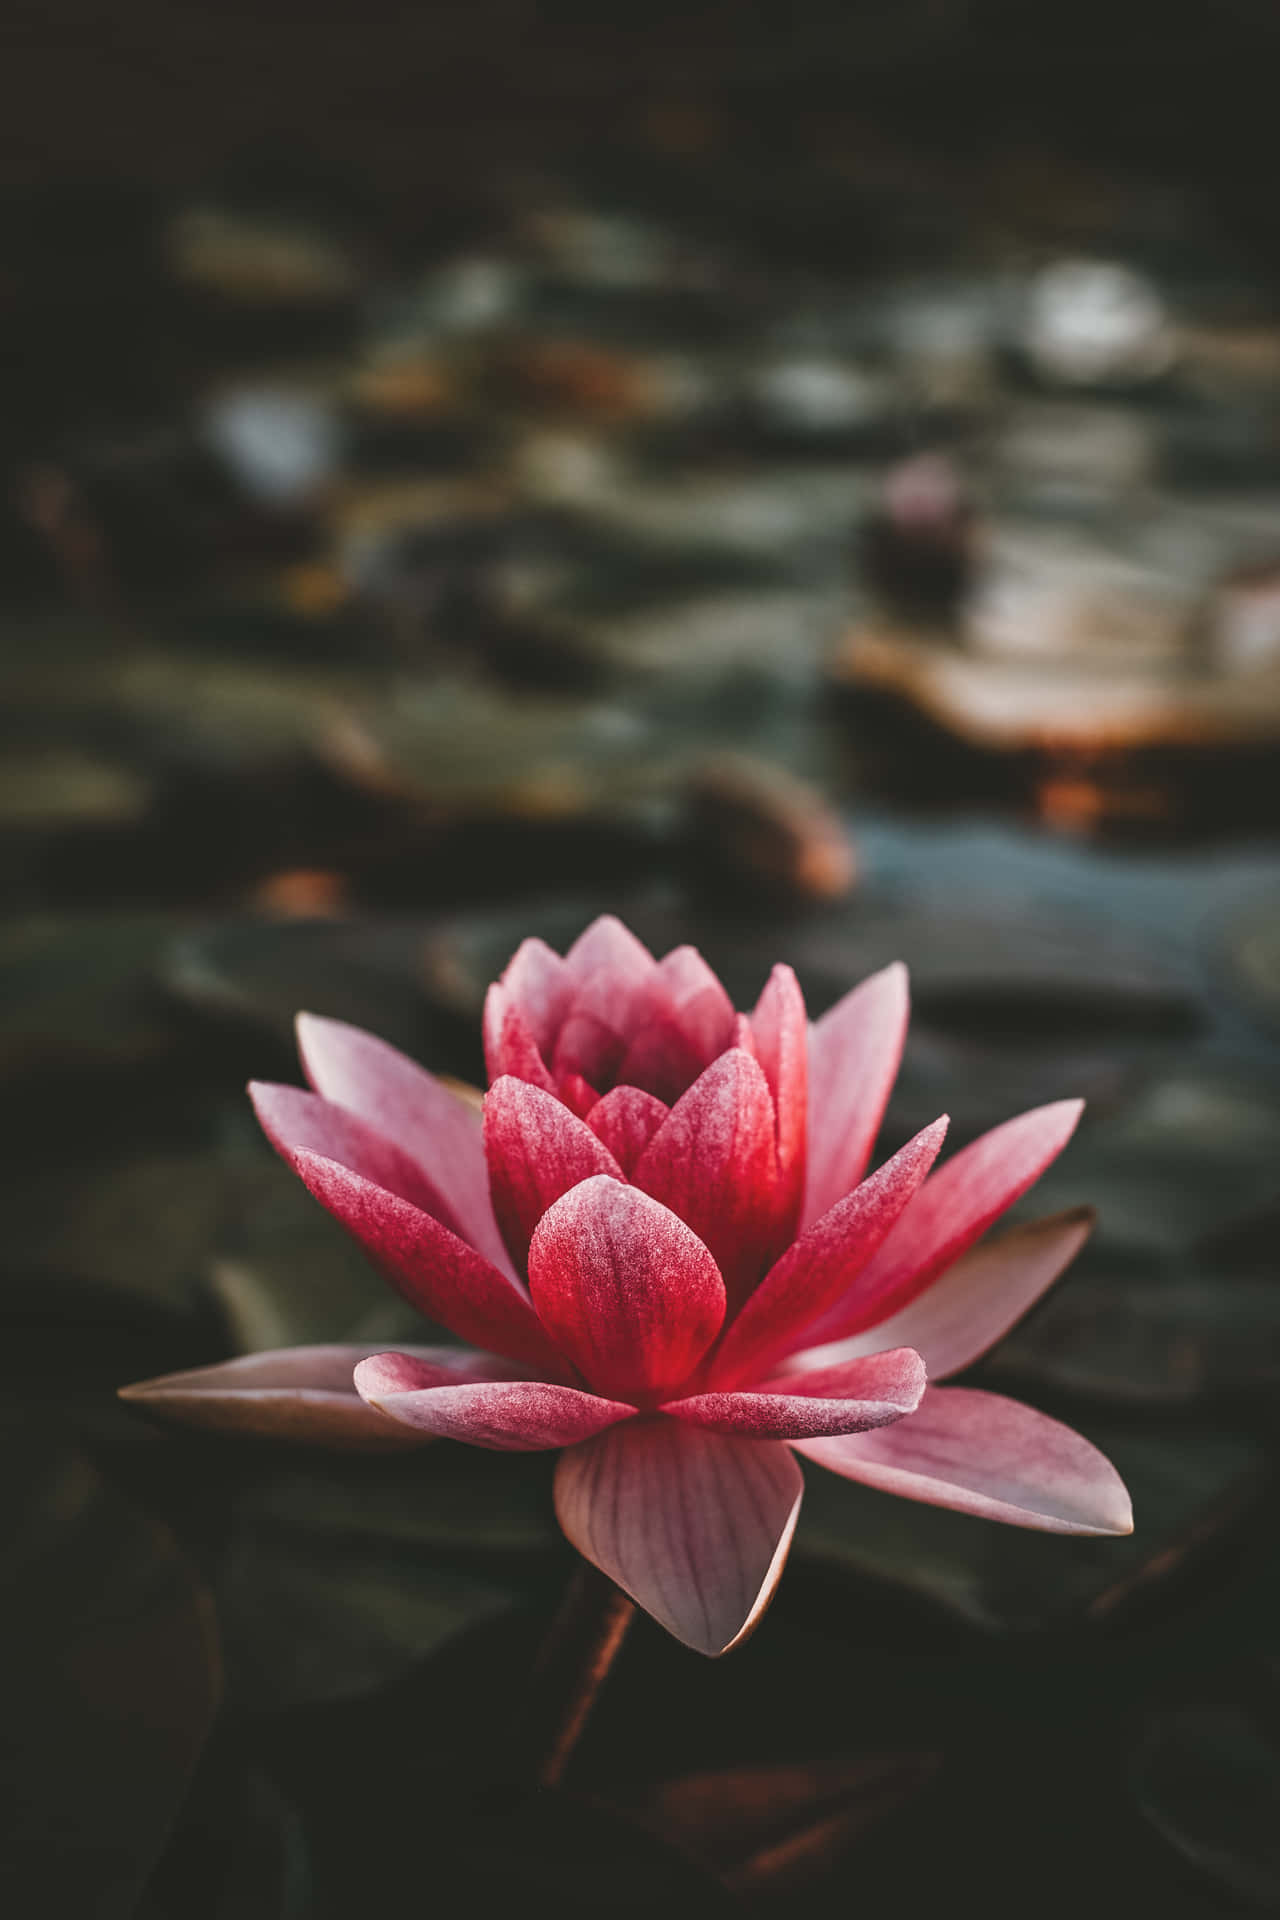 Graceful Representation of the Majestic Lotus